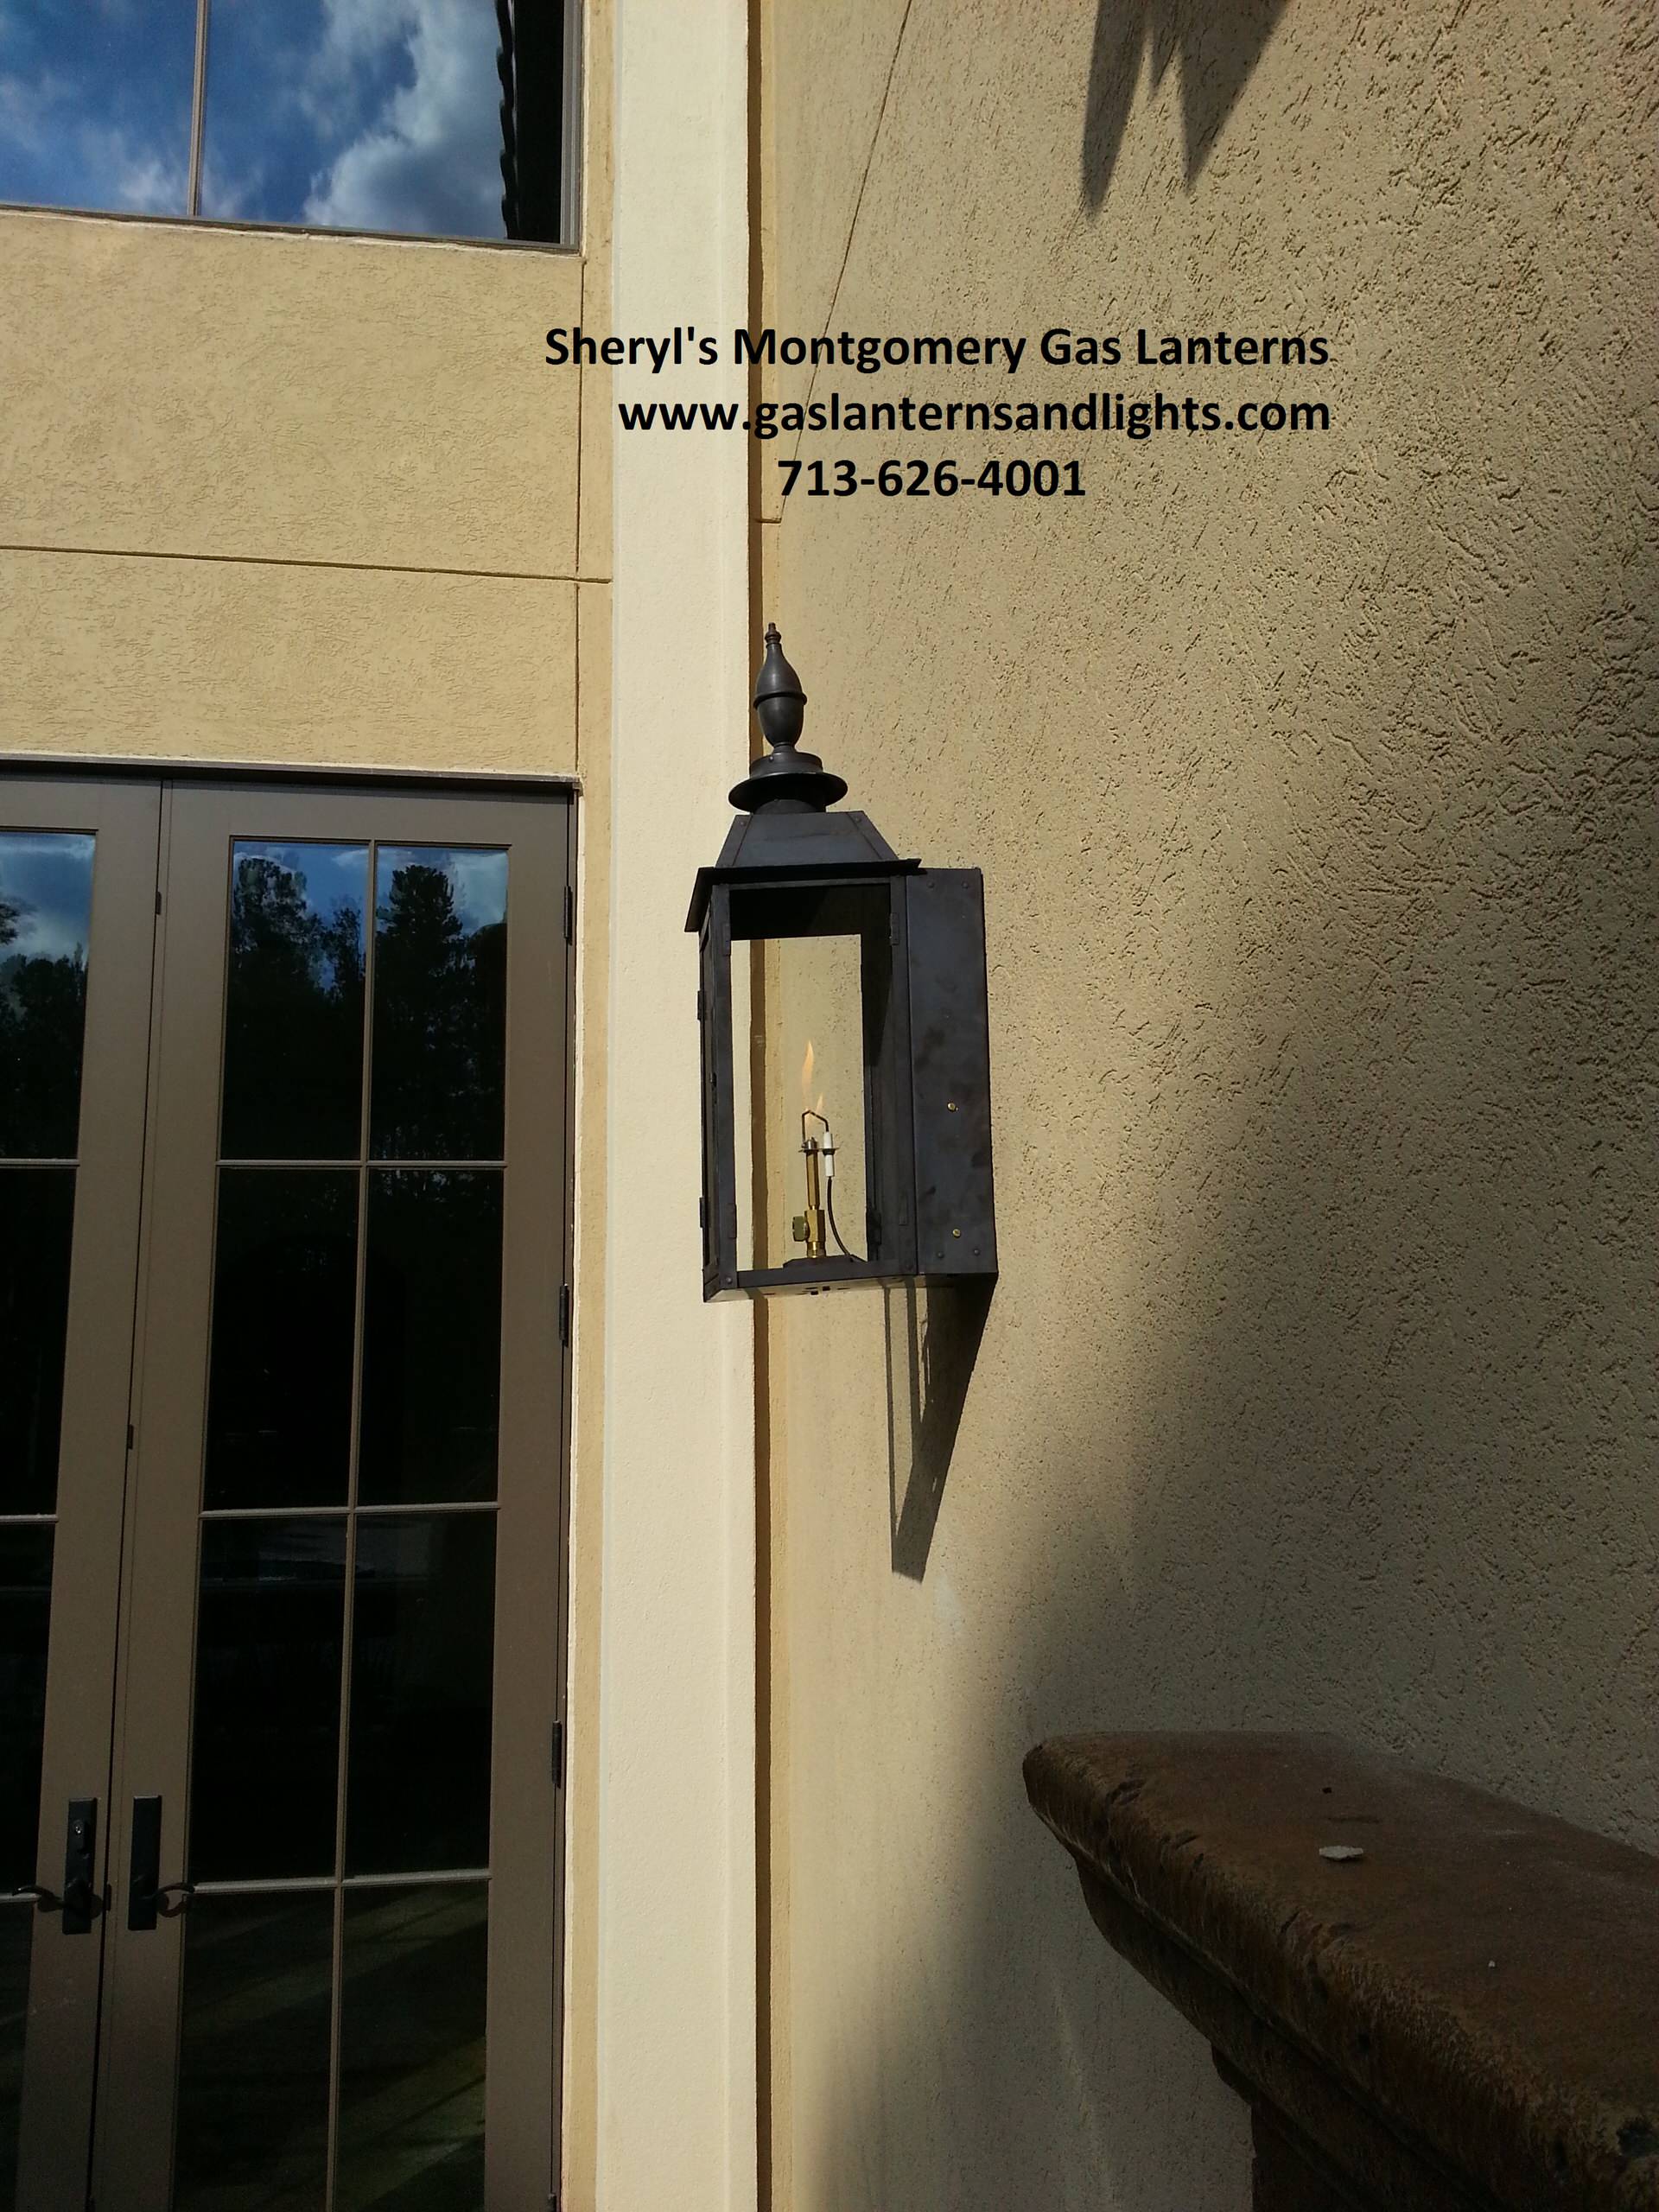 Sheryl's Montgomery Gas Lanterns